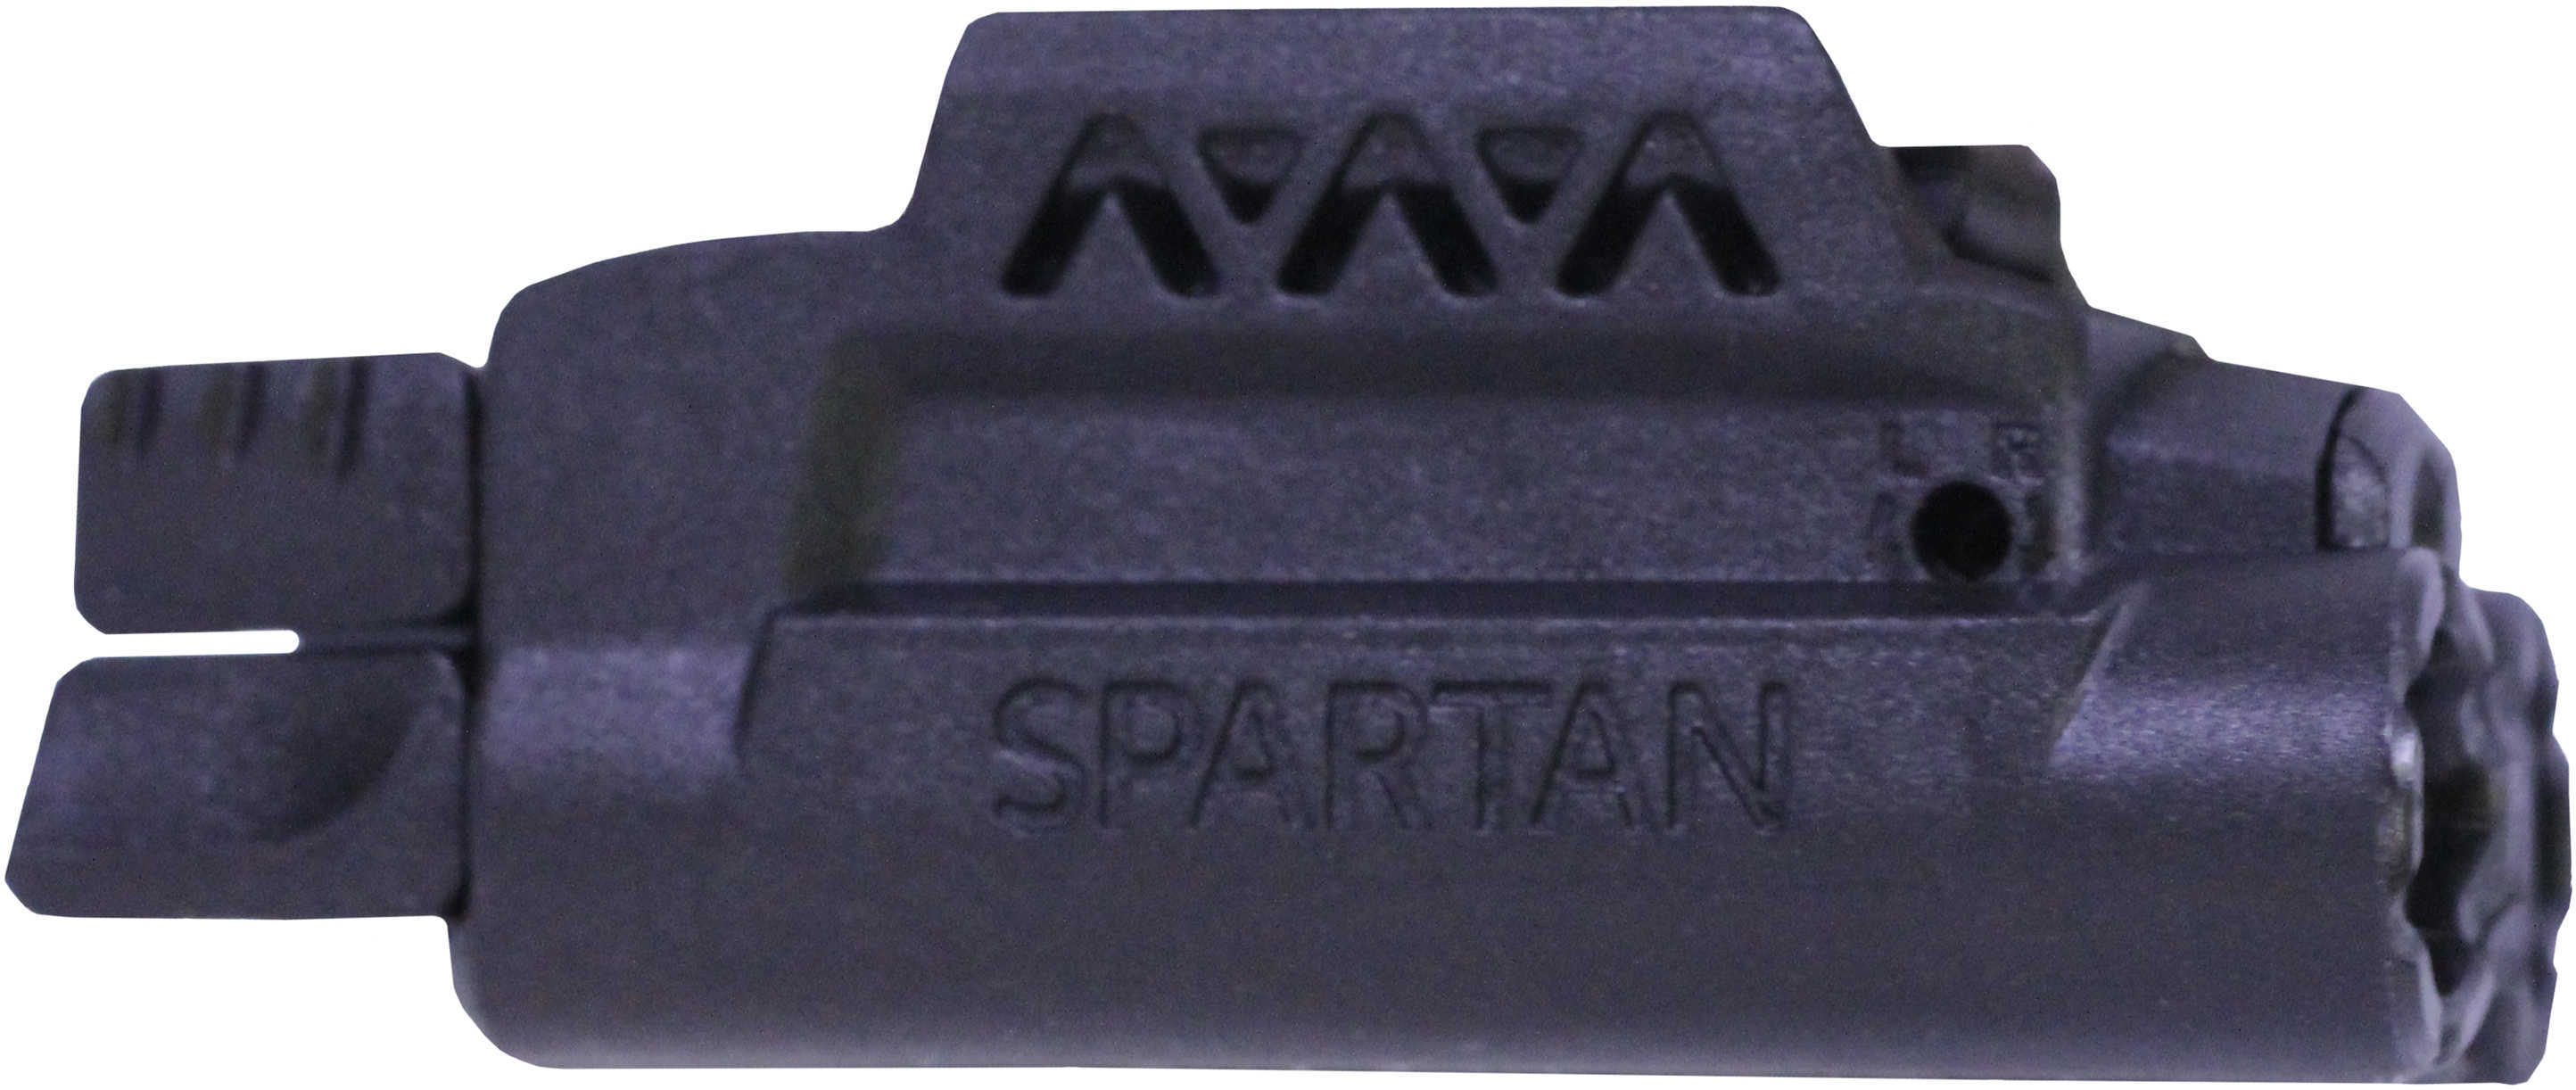 LaserMax Spartan Red Picatinny or Similar Ra-img-1